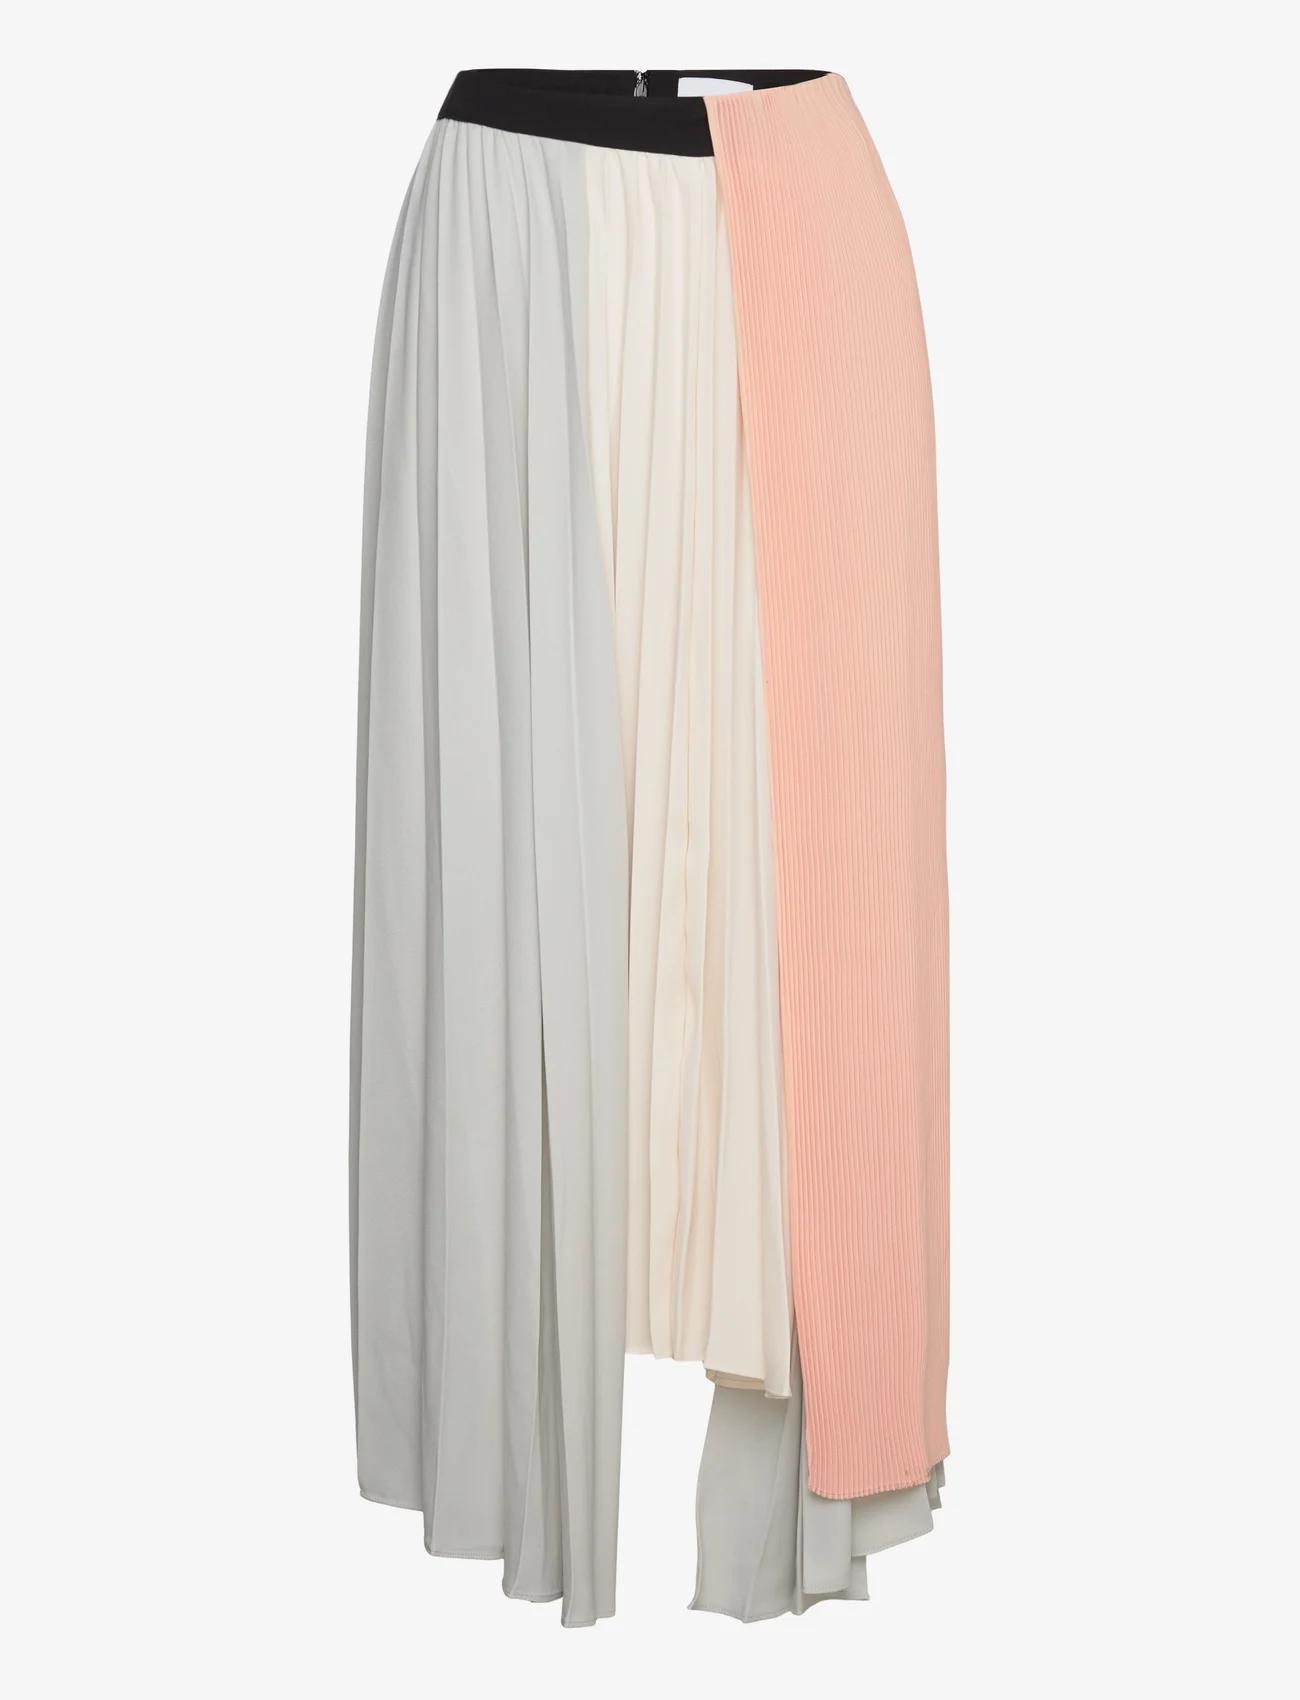 Reiss - MADDIE - pleated skirts - pink/cream - 0